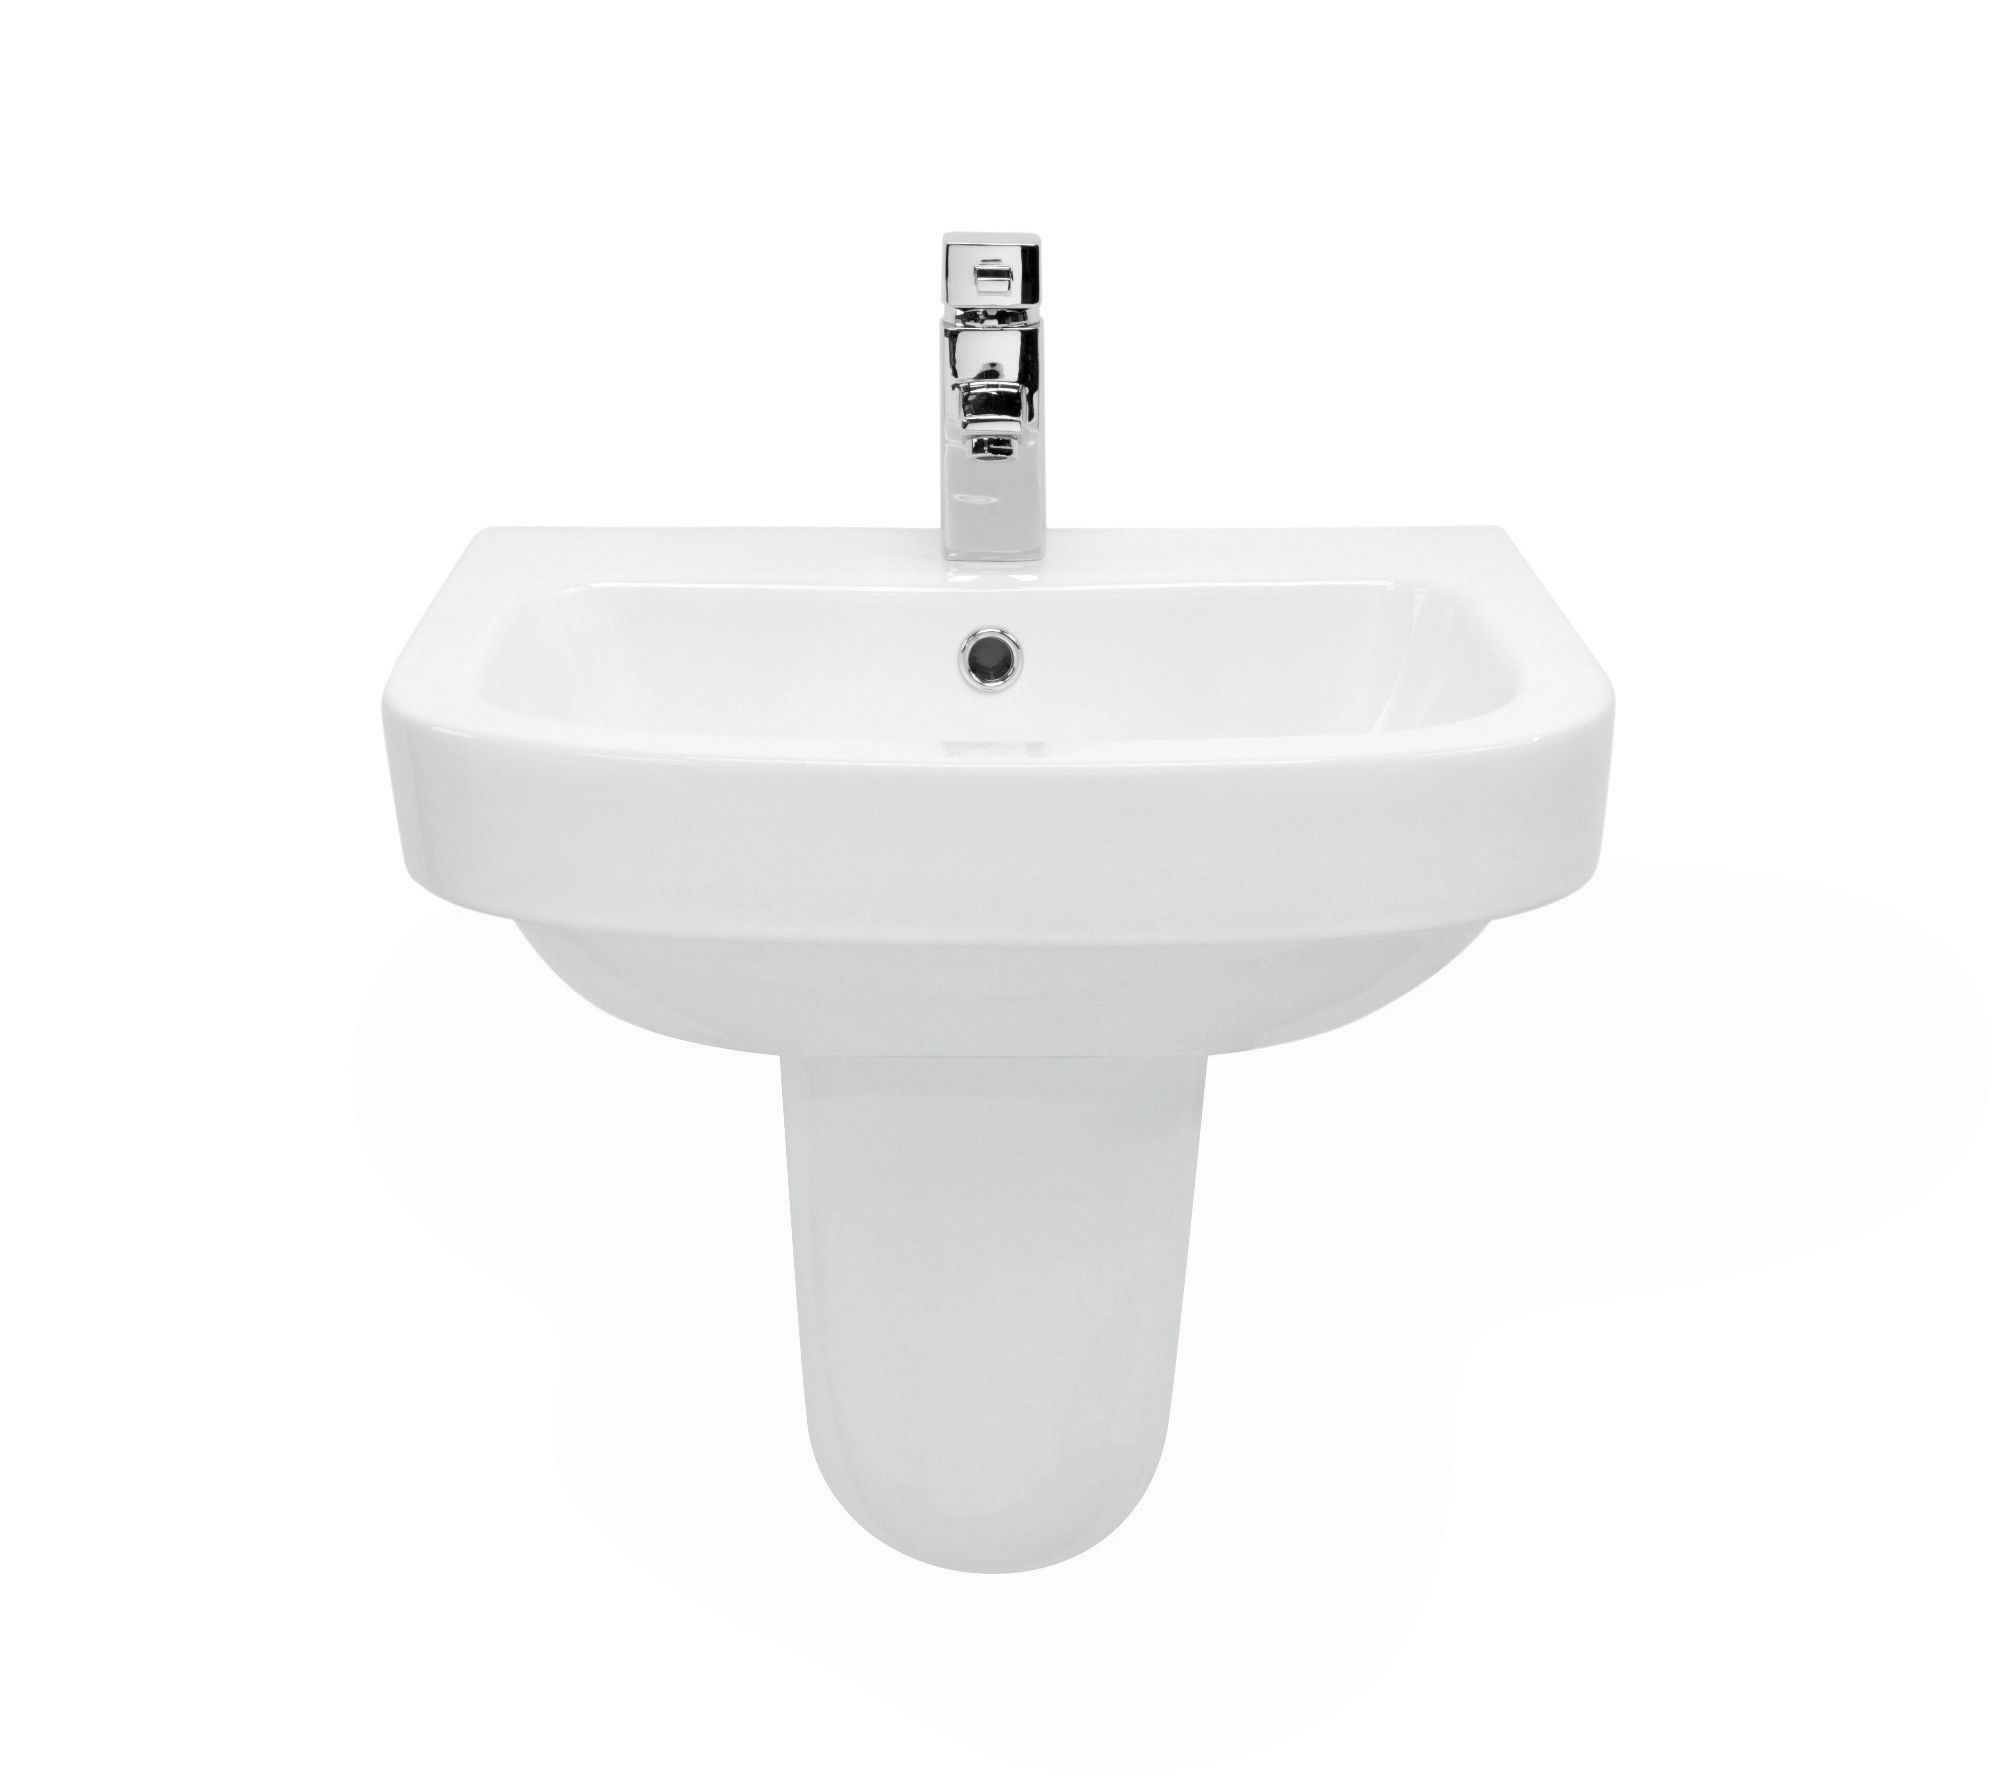 Image of Wickes Phoenix Ceramic Wall Hung Bathroom Basin with Semi Pedestal - 520mm